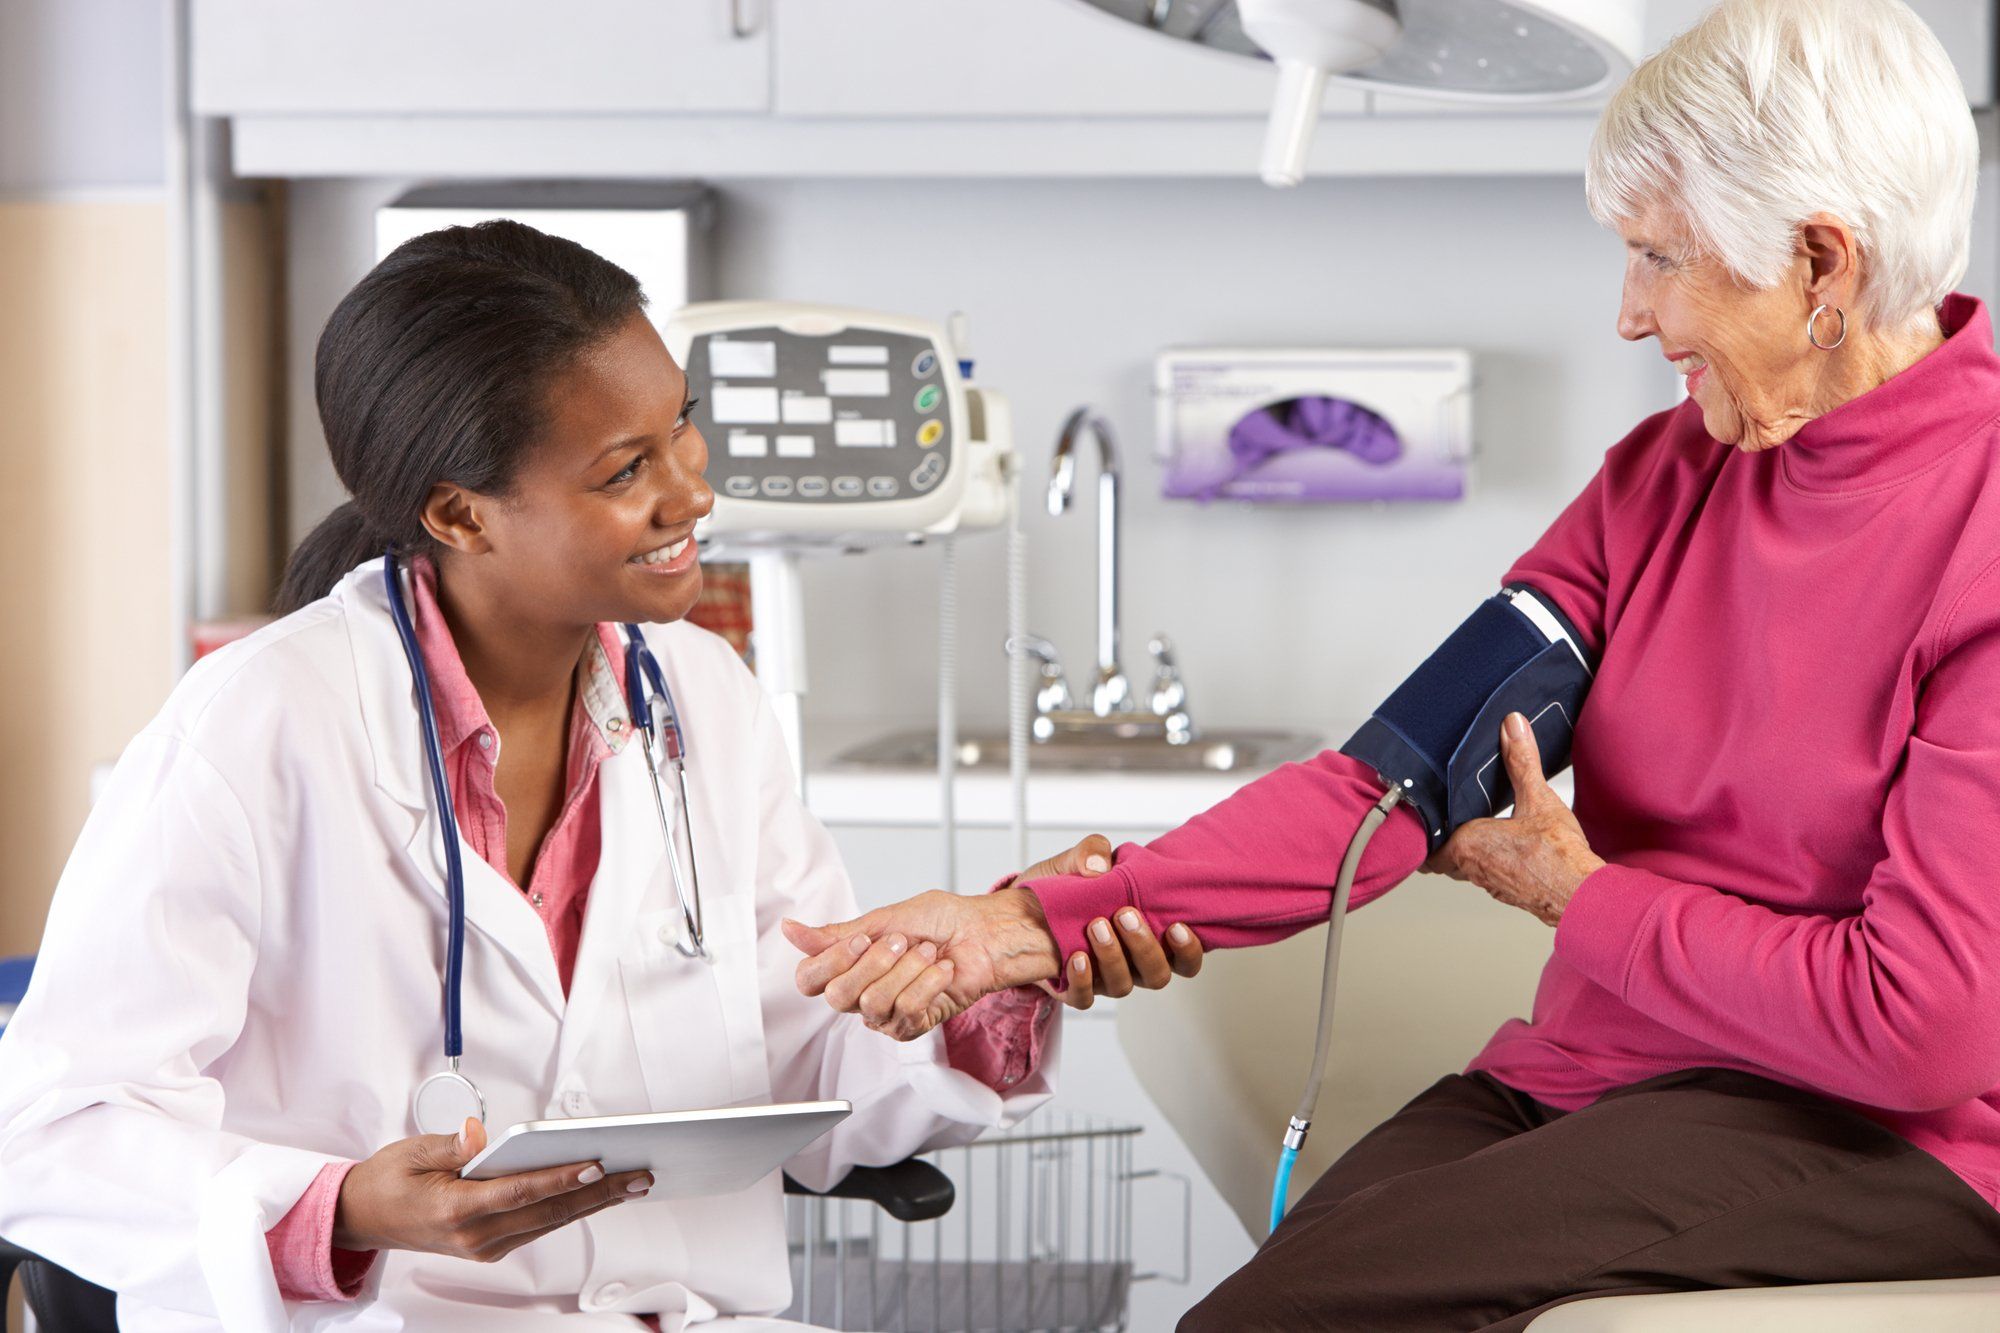 Female doctor takes blood pressure of elderly woman